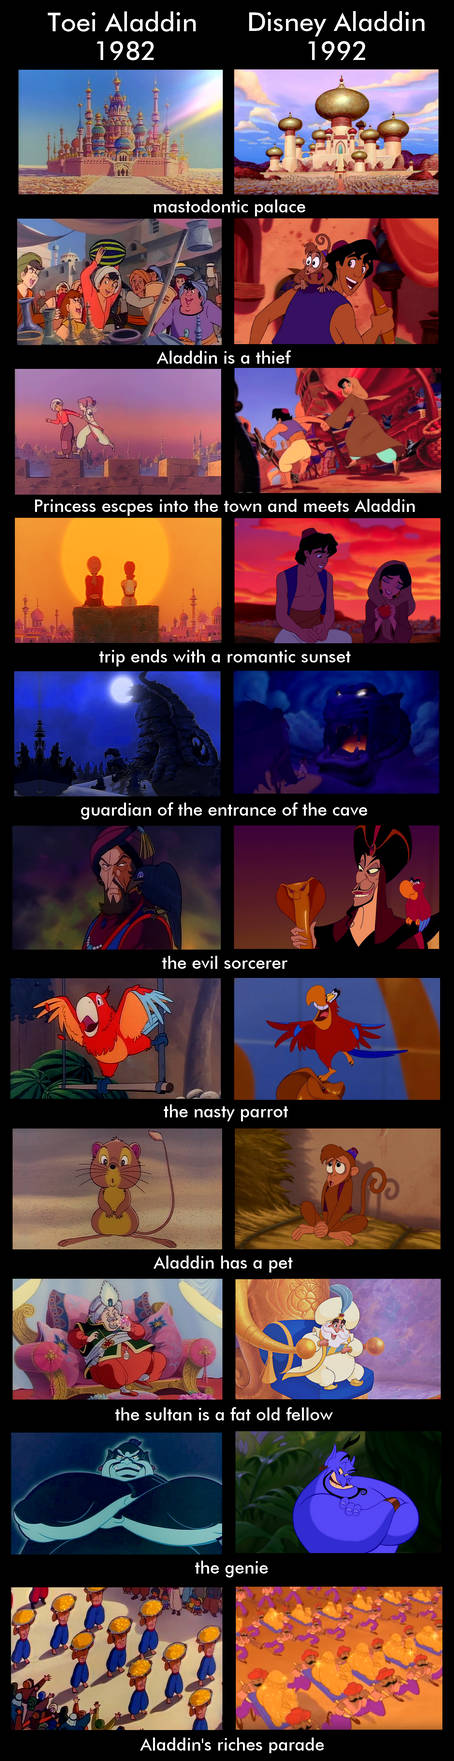 Aladdin - Toei and Disney Similarities by moonandreacre on DeviantArt